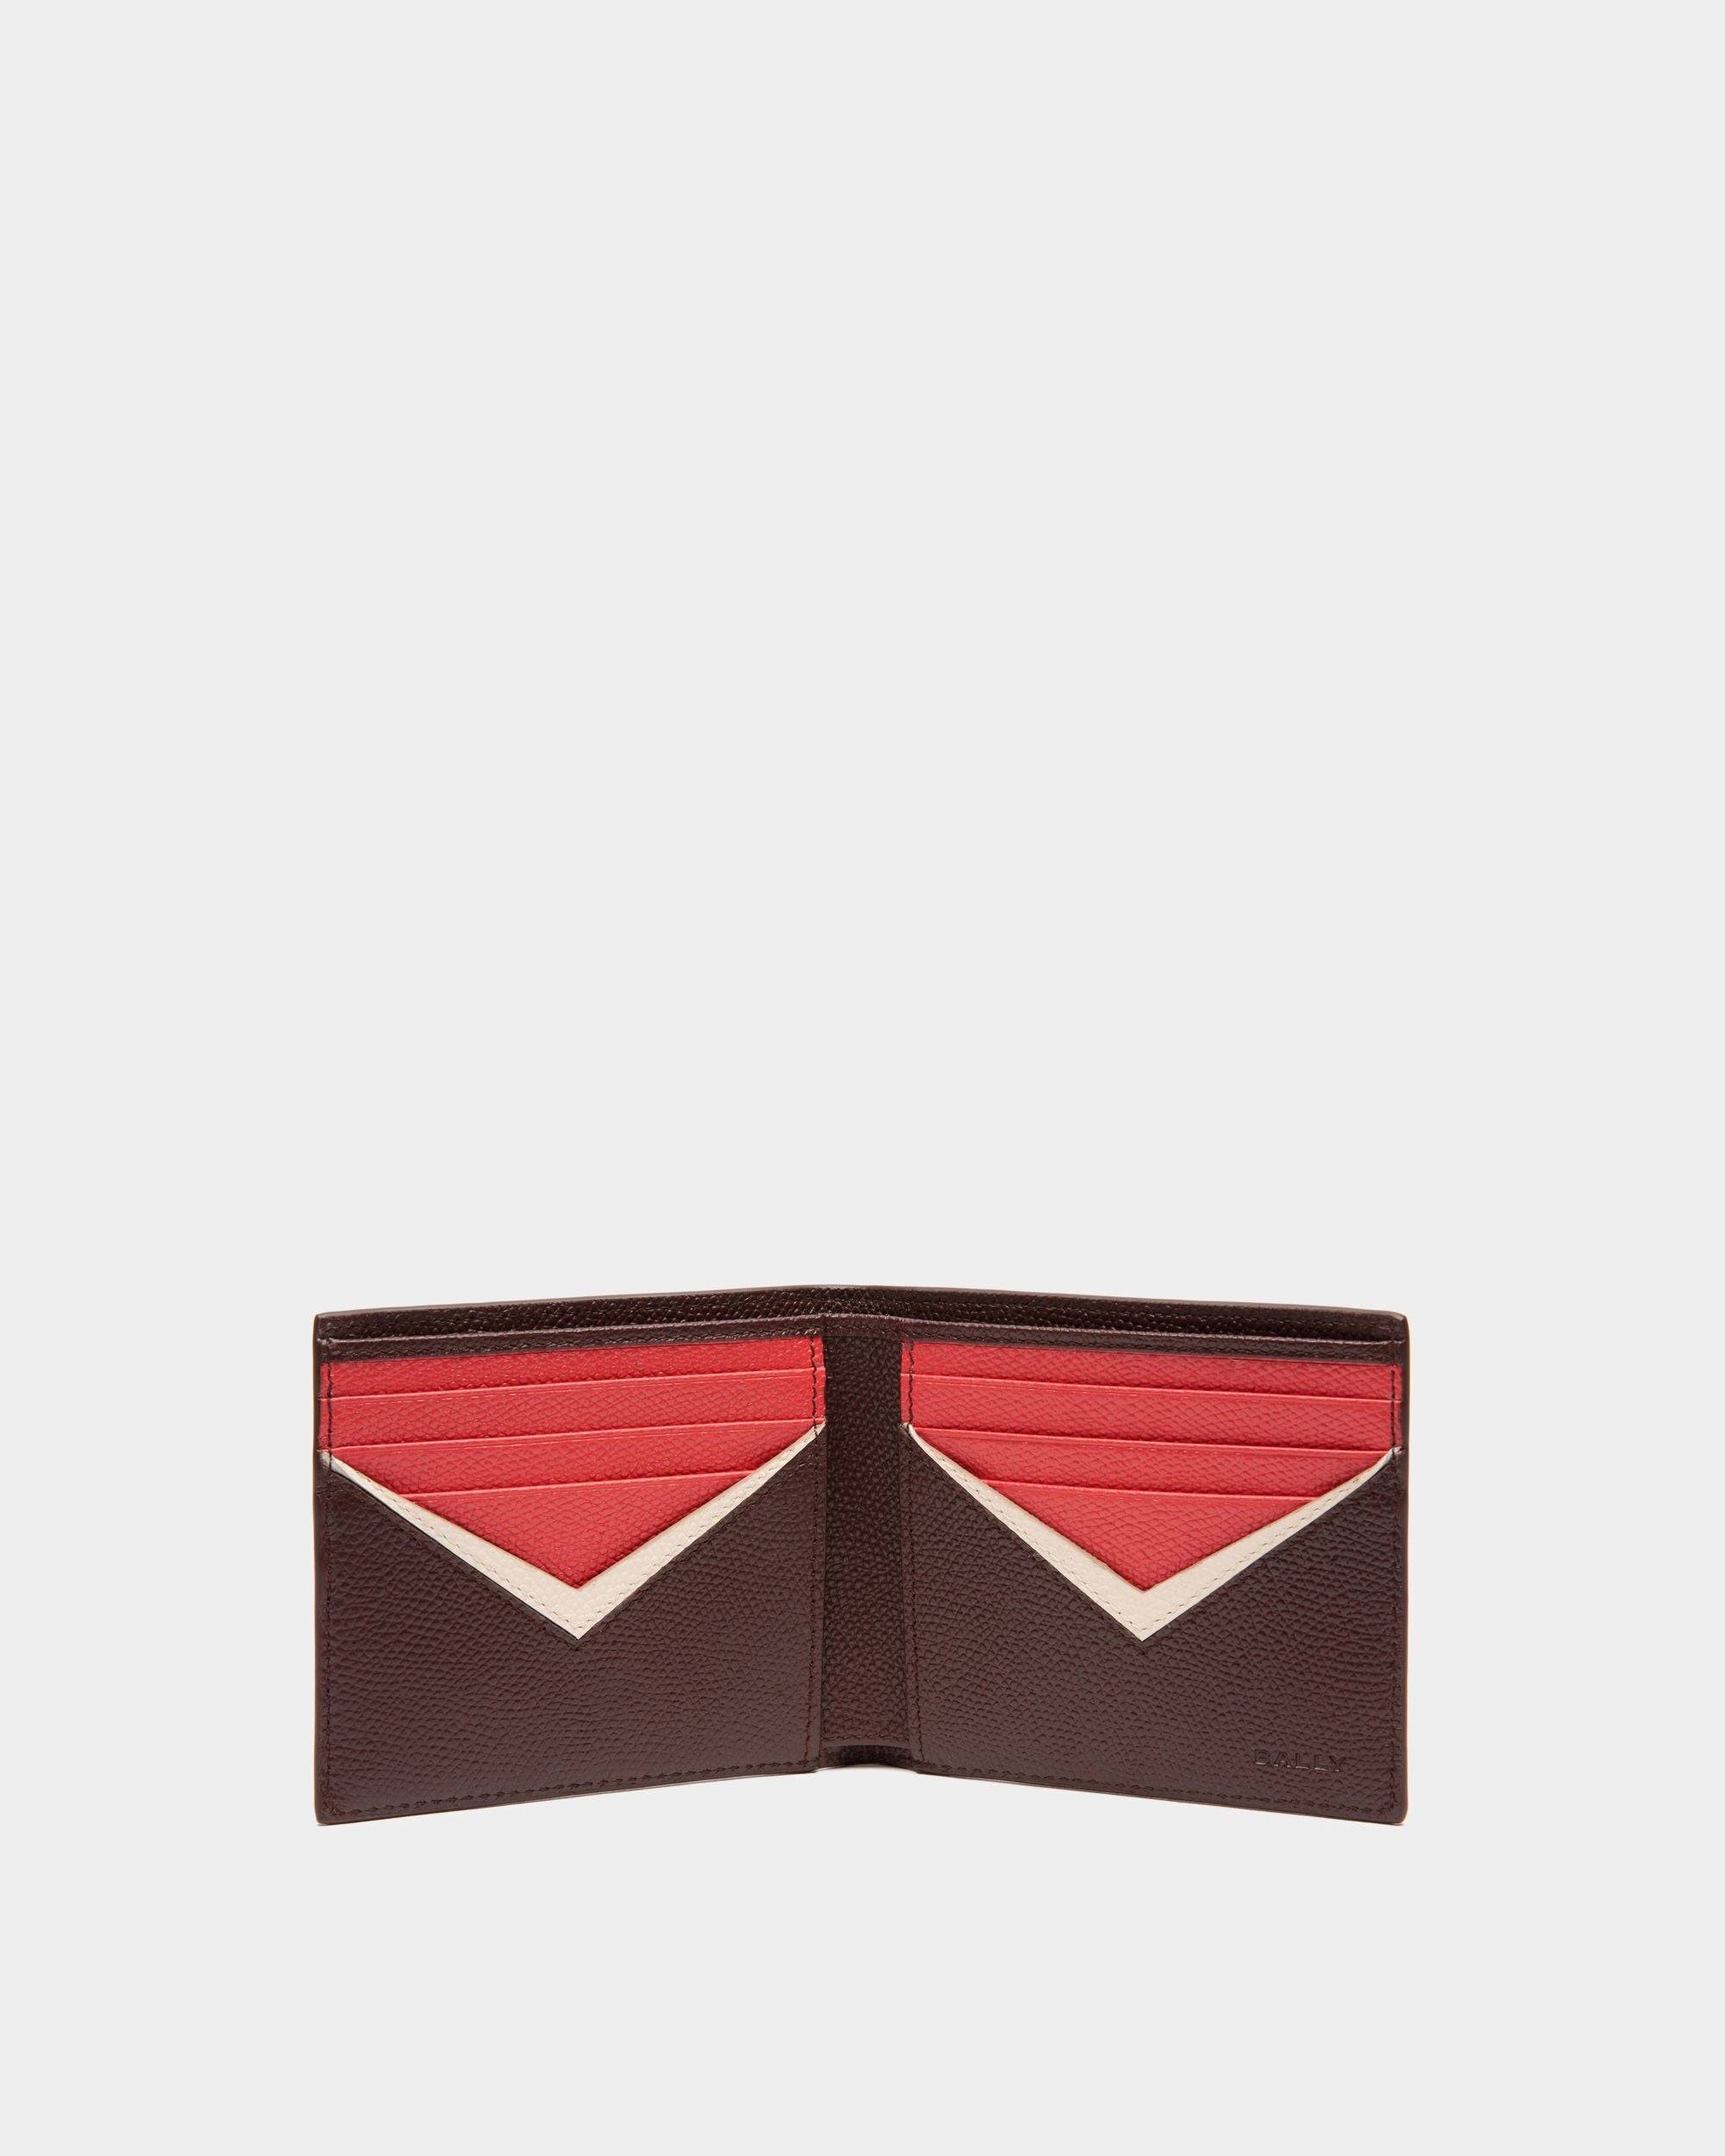 Flag | Men's Bifold Wallet in Chestnut Brown Grained Leather | Bally | Still Life Open / Inside